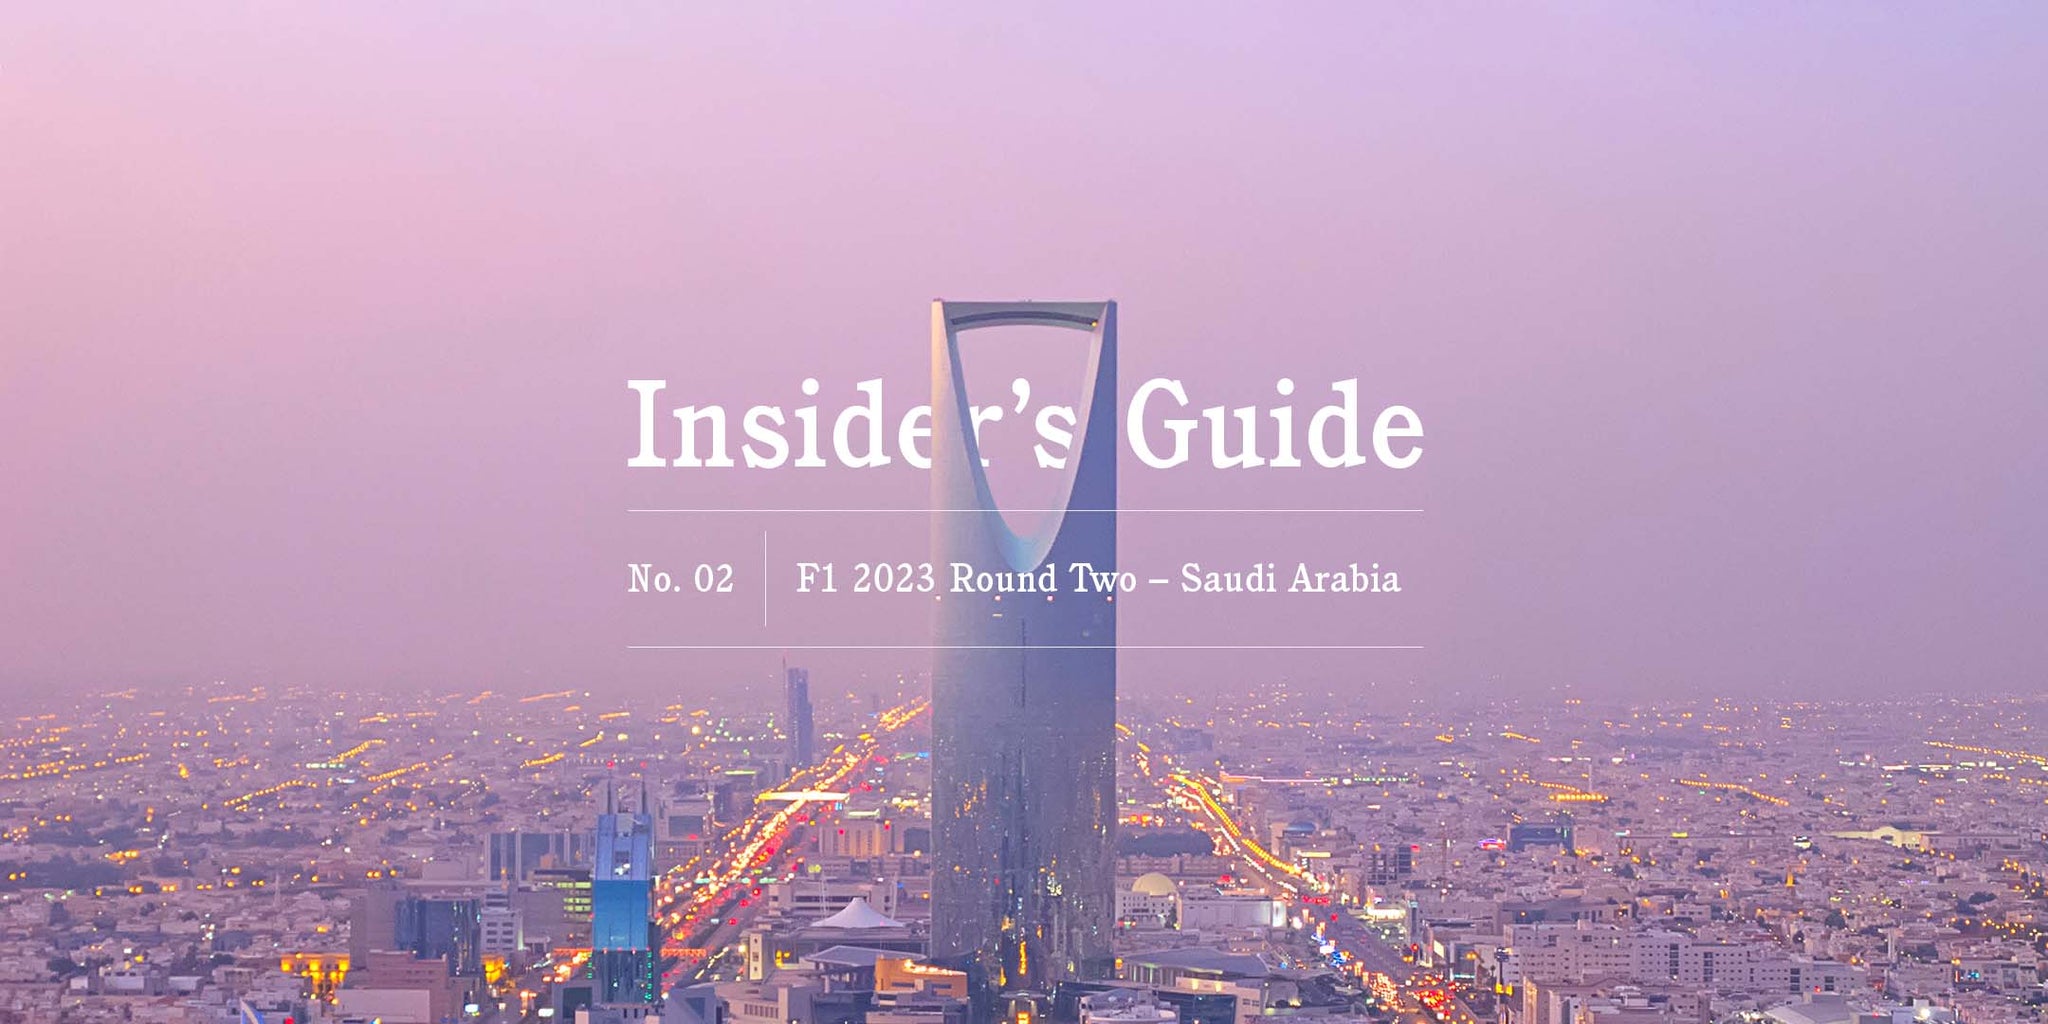 F1 2023 Insider’s Guide No. 02 – Saudi Arabia